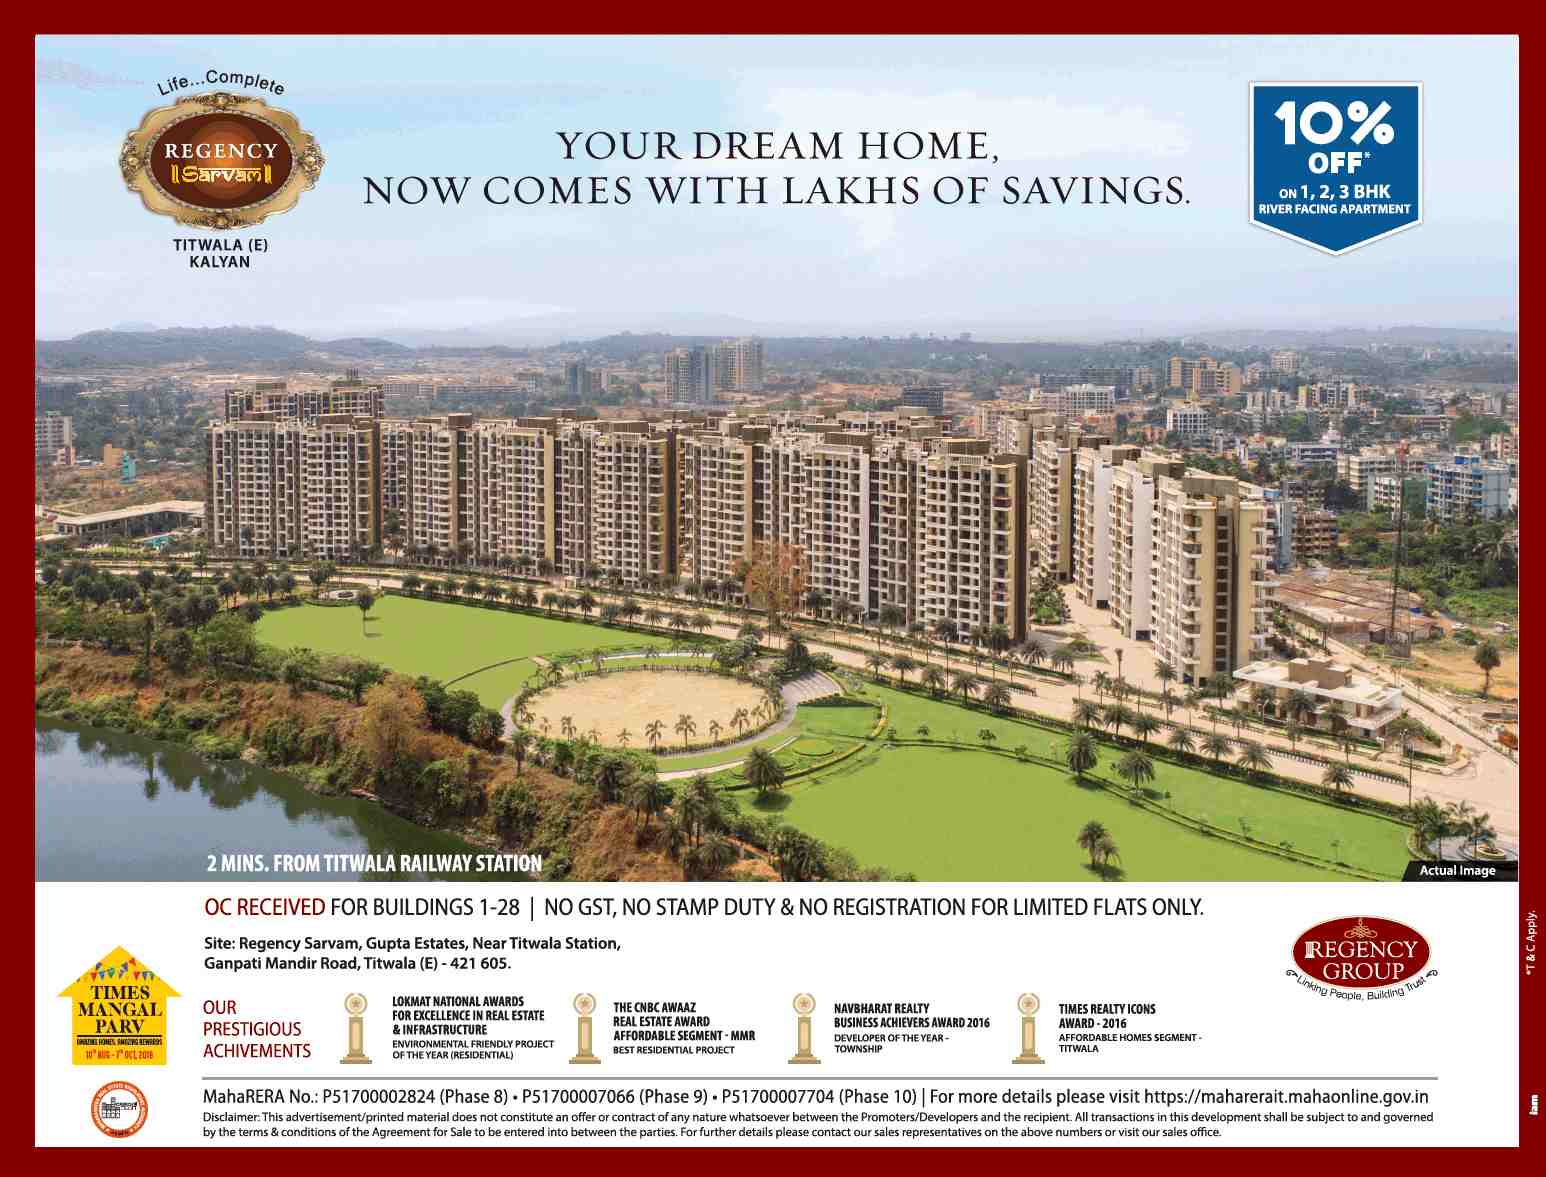 Get 10% off on 1, 2 and 3 BHK river facing apartments at Regency Sarvam in Mumbai